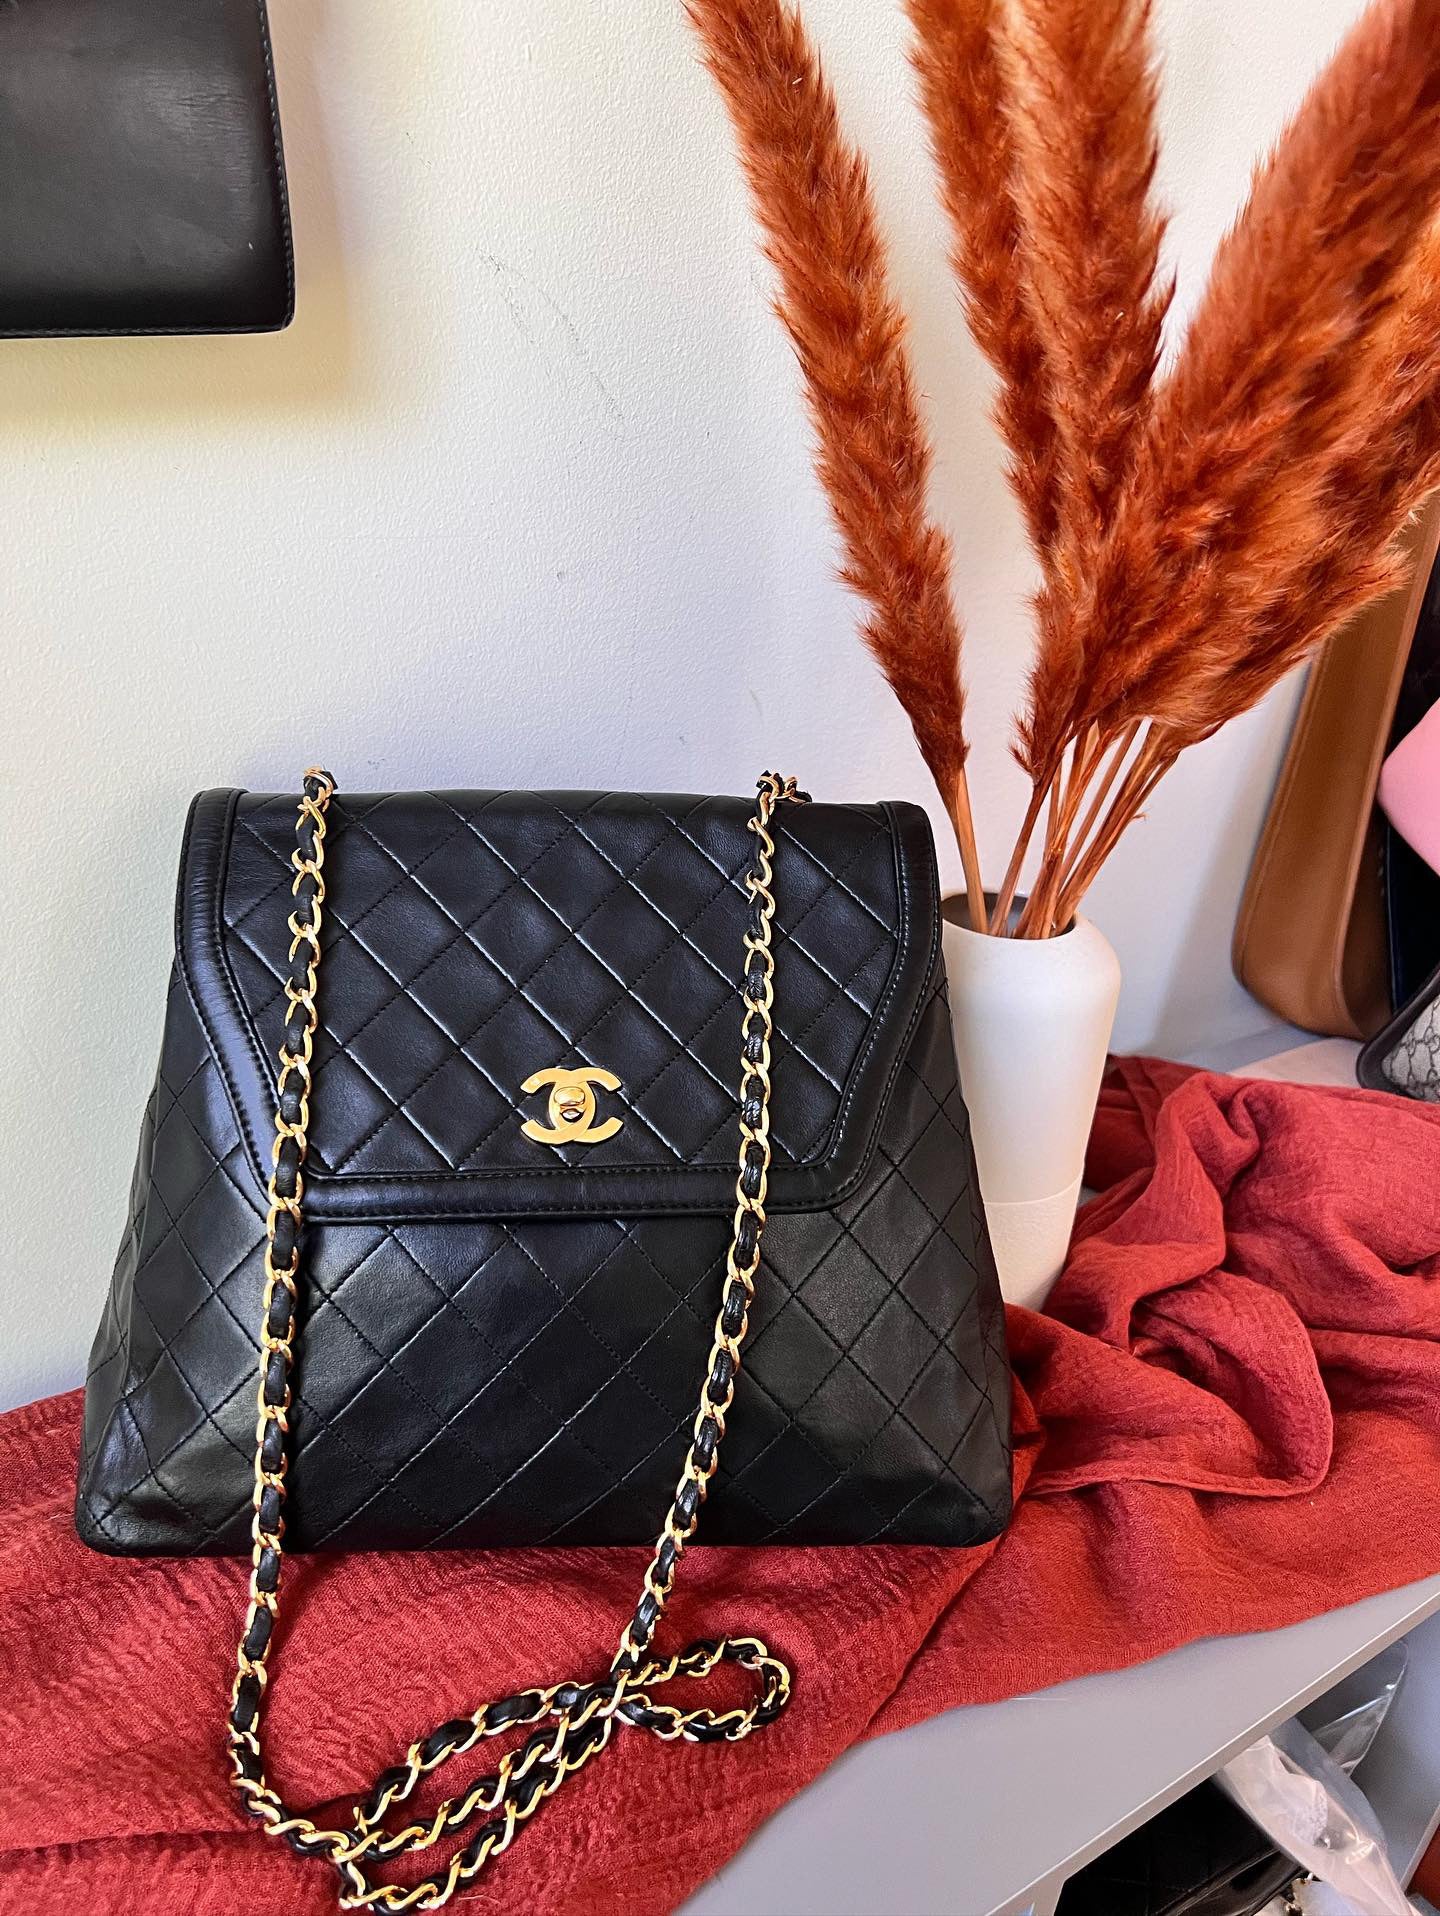 Chanel vintage lambskin 24k gold hardware trapezoid crossbody bag